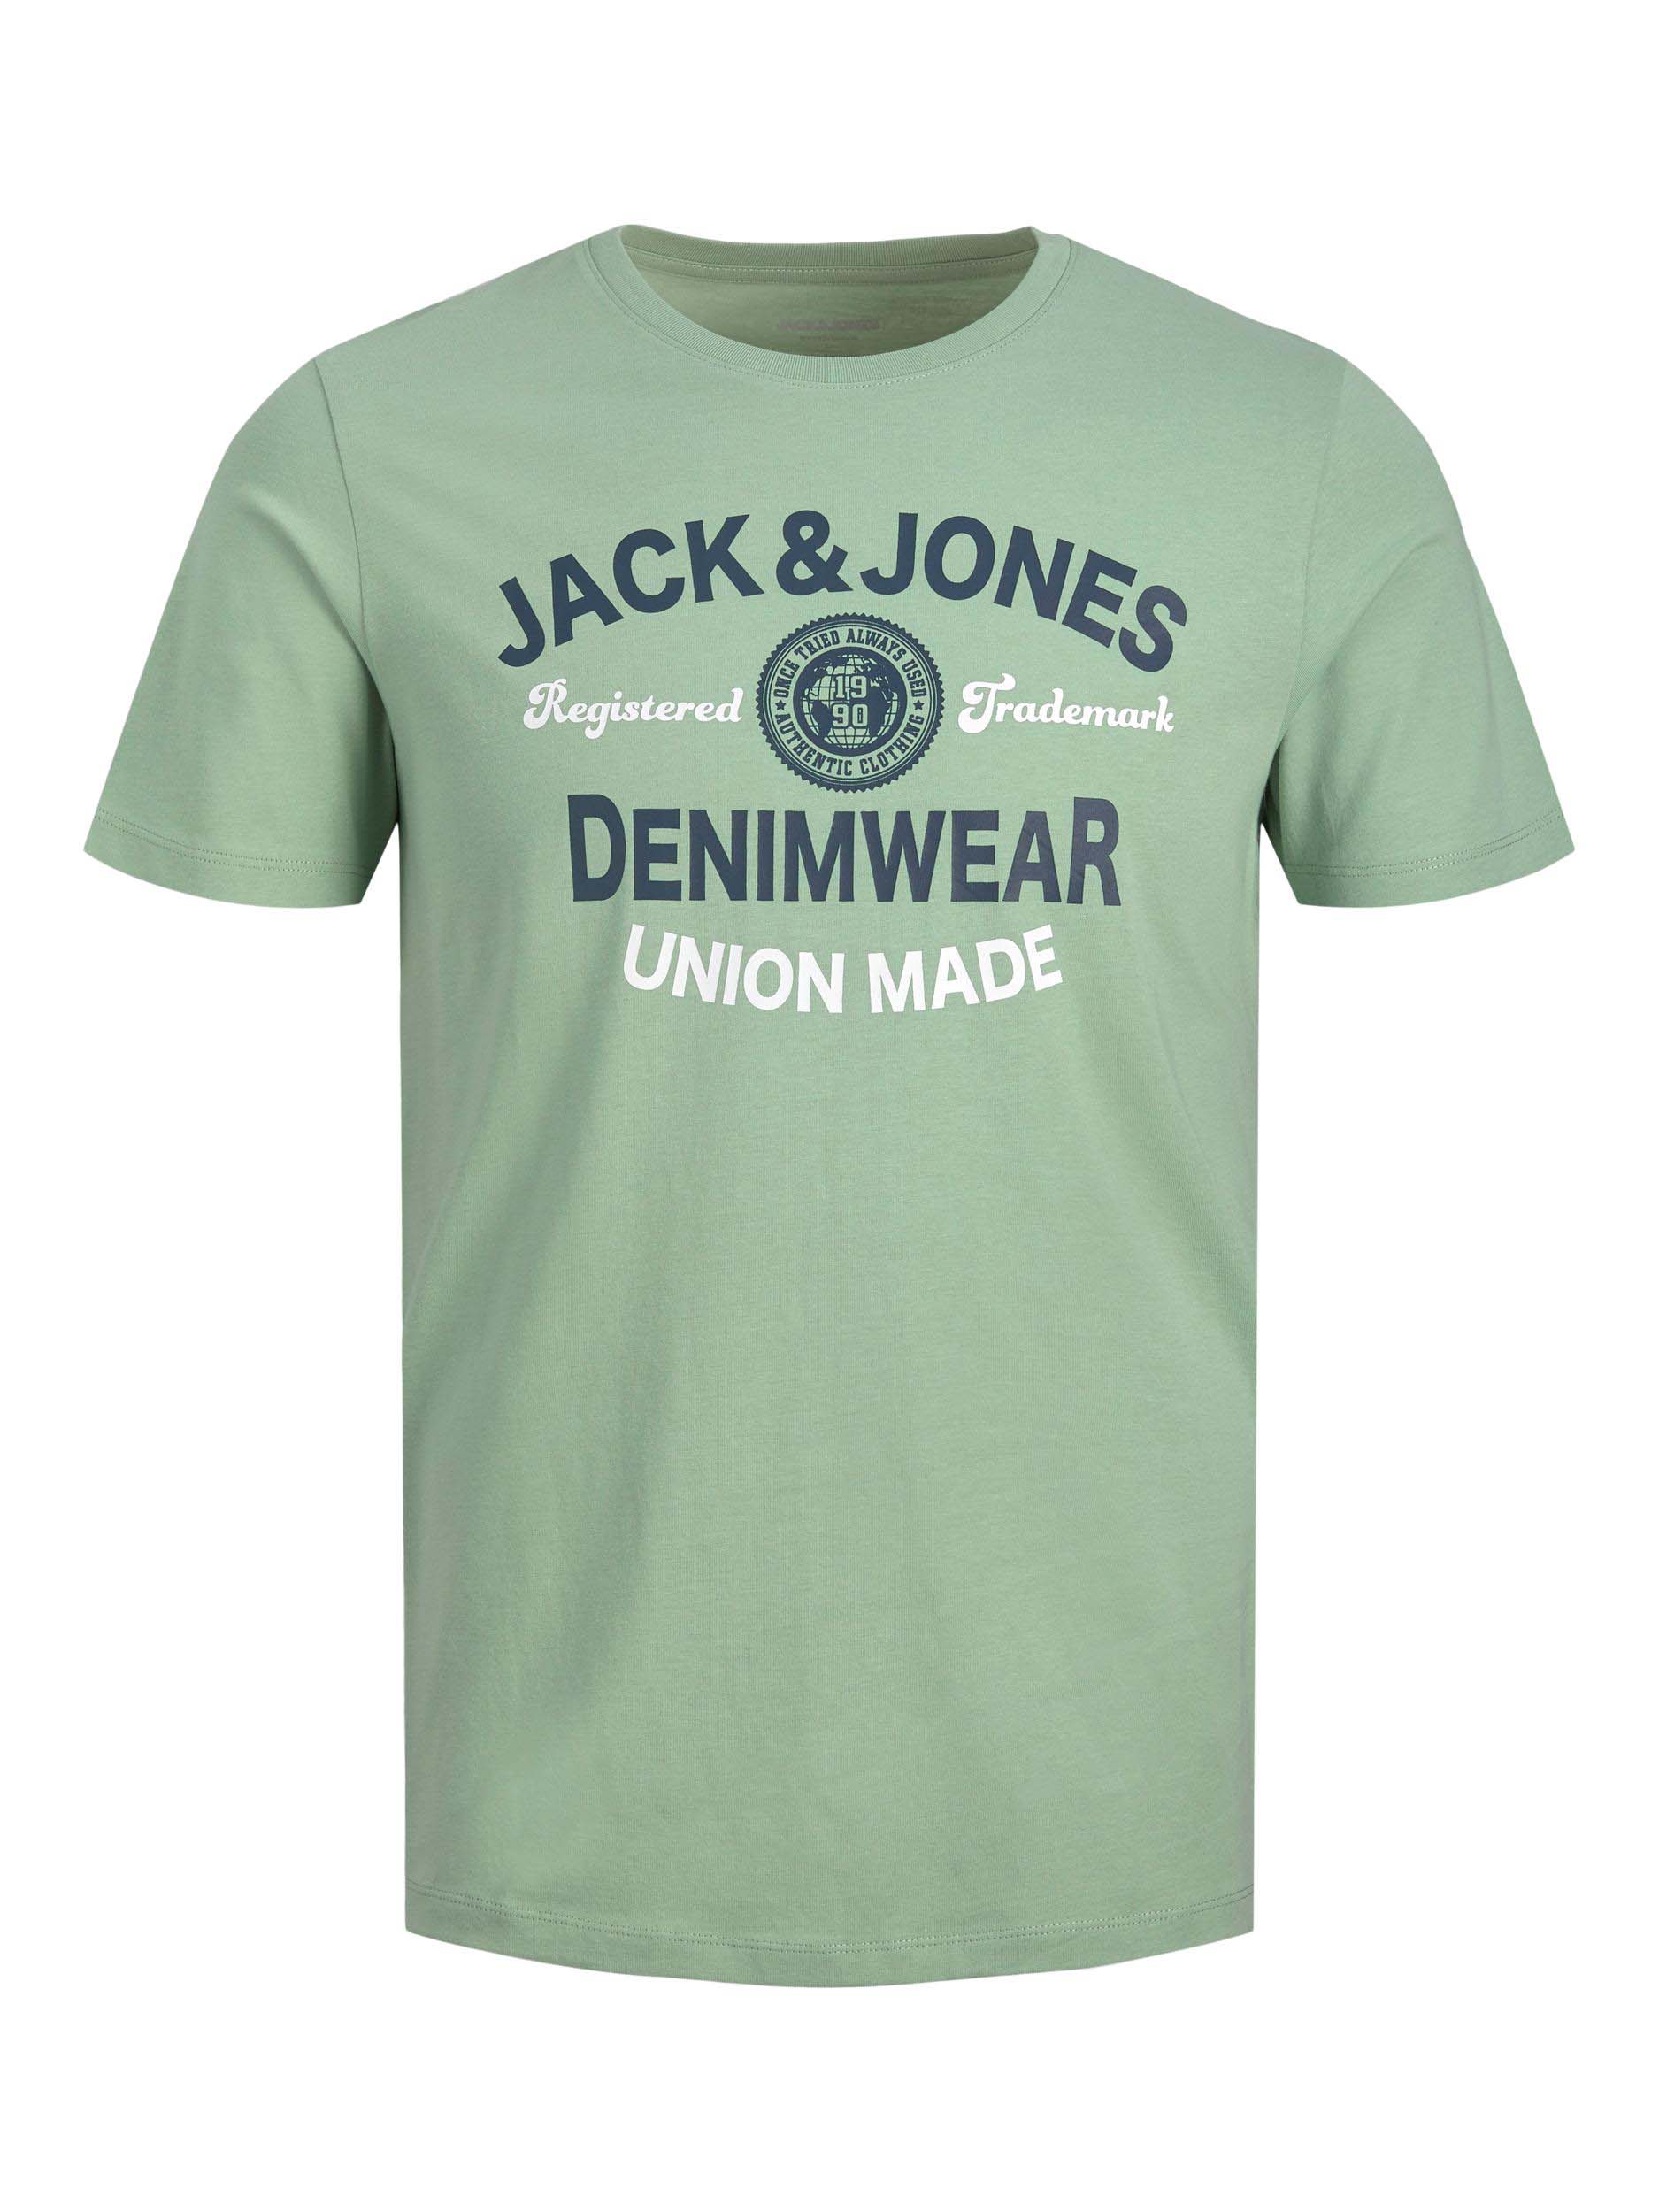 JACK & JONES Big & Tall Green Denimwear Logo T-Shirt | BadRhino 2